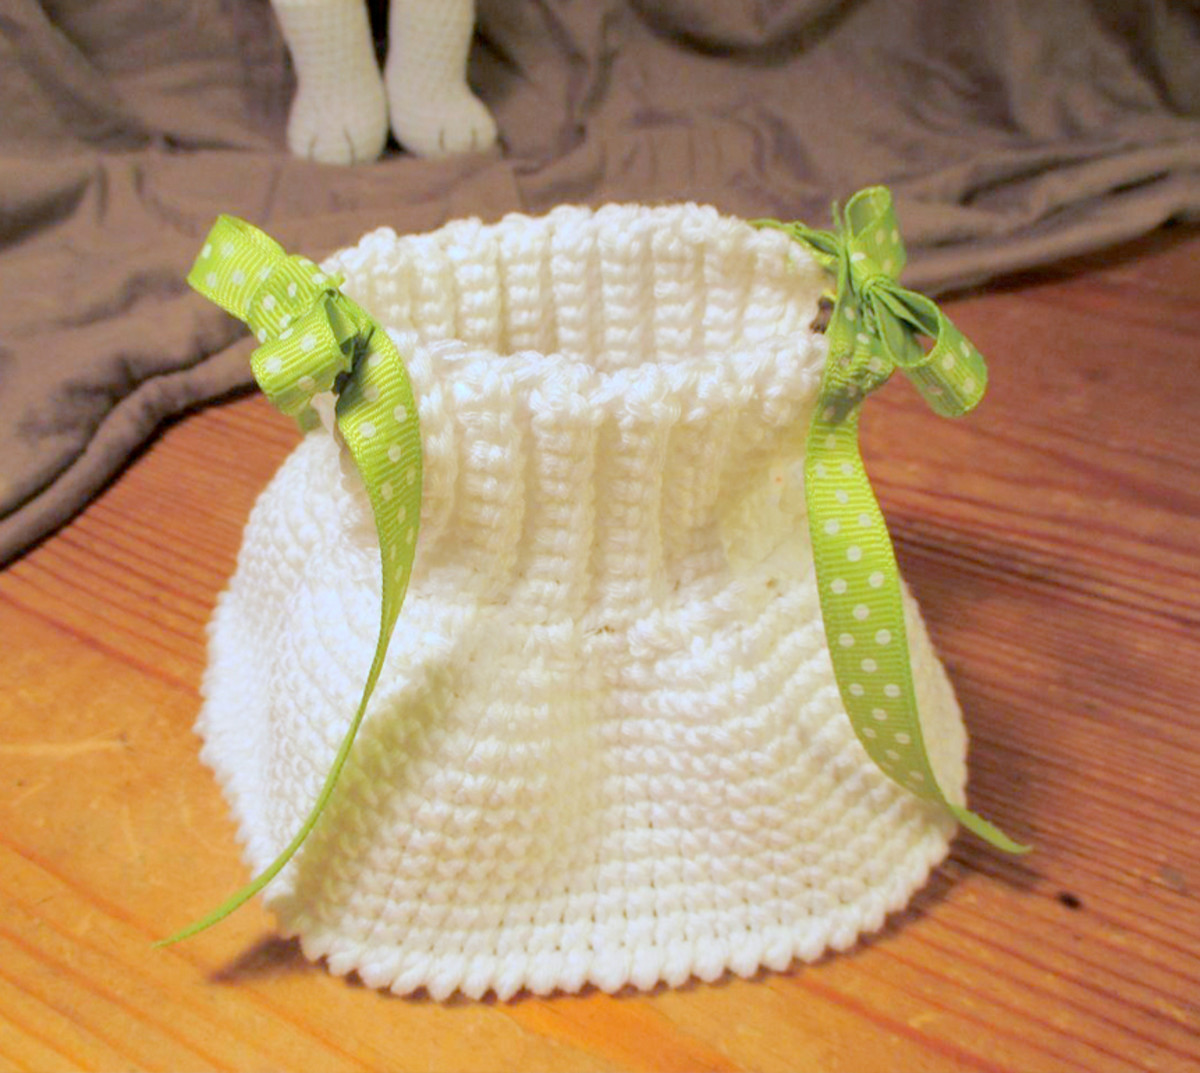 free-crochet-pattern-elephant-girl-amigurumi-doll